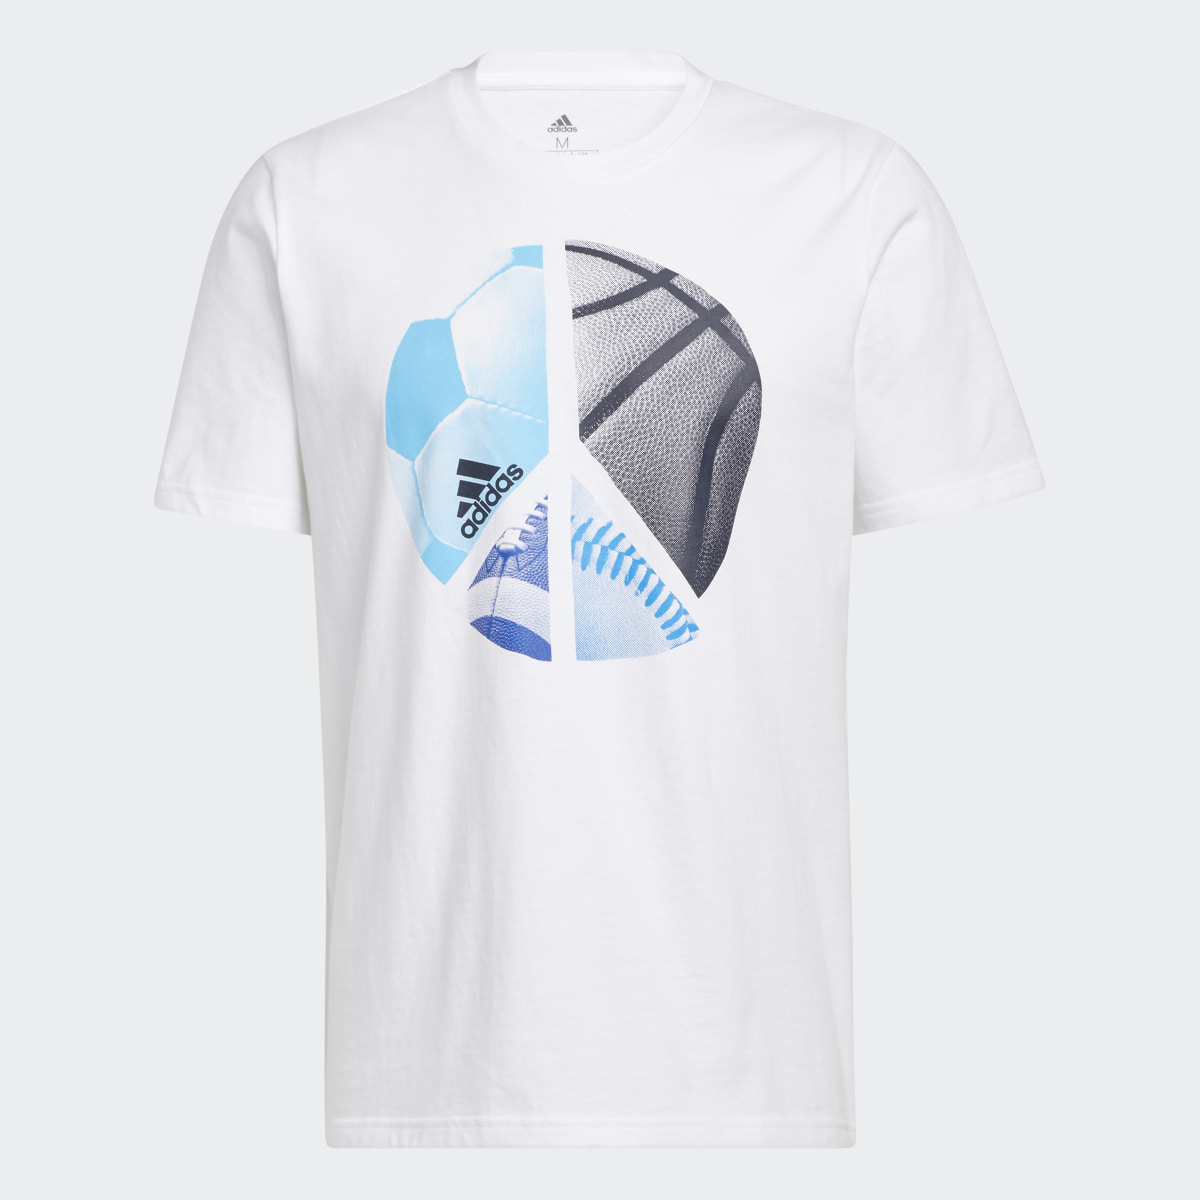 Adidas T-shirt Multiplicity. 5